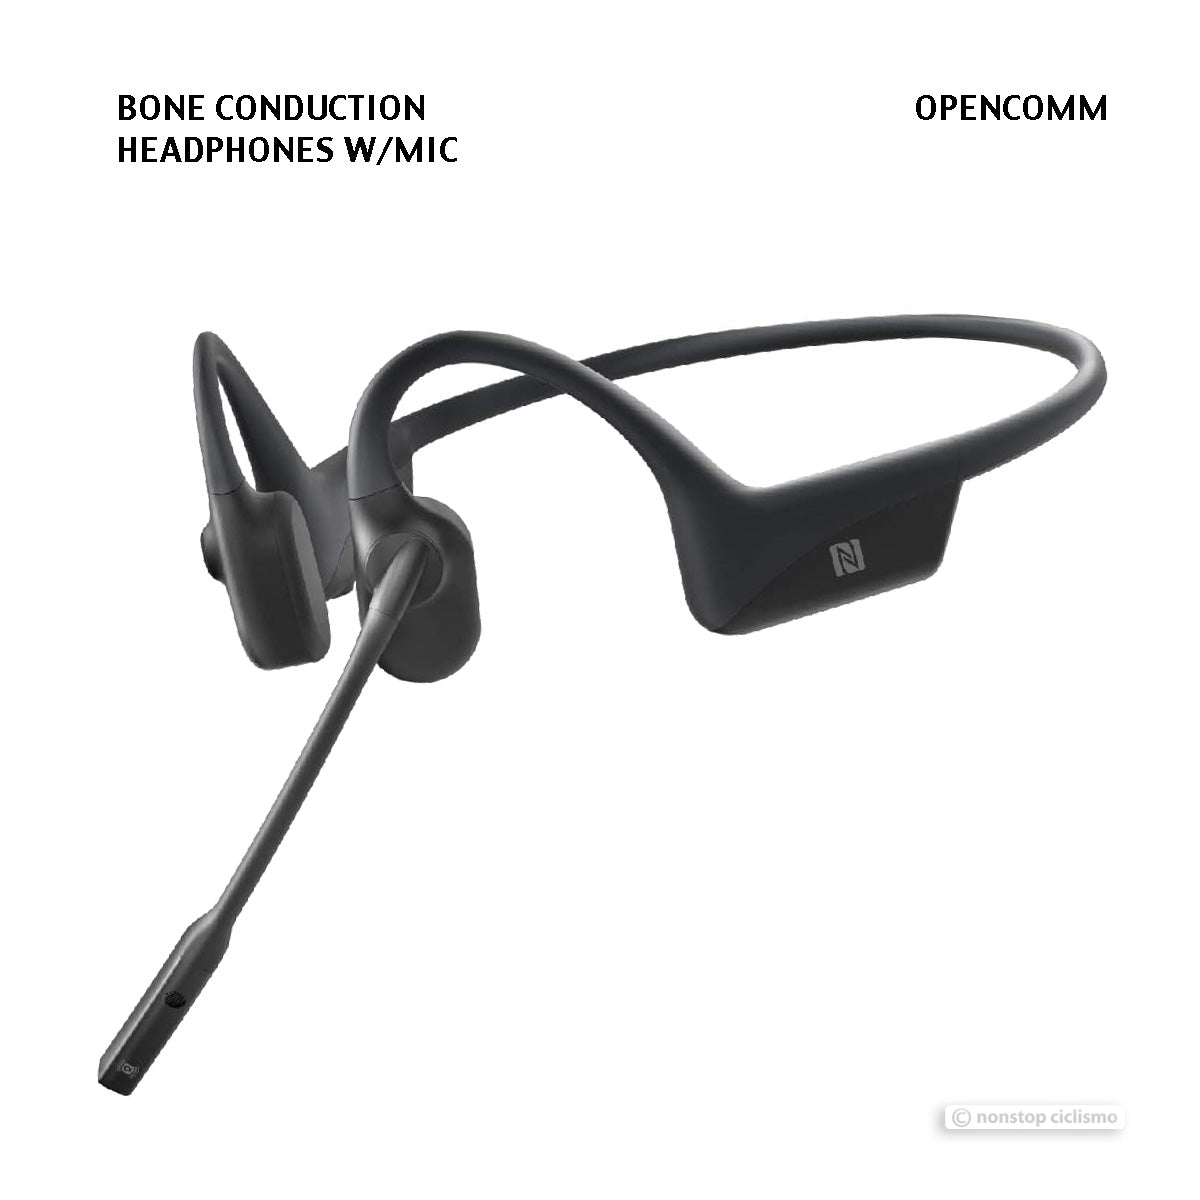 SHOKZ OPENCOMM BONE CONDUCTION HEADSET — Nonstop Ciclismo Gear